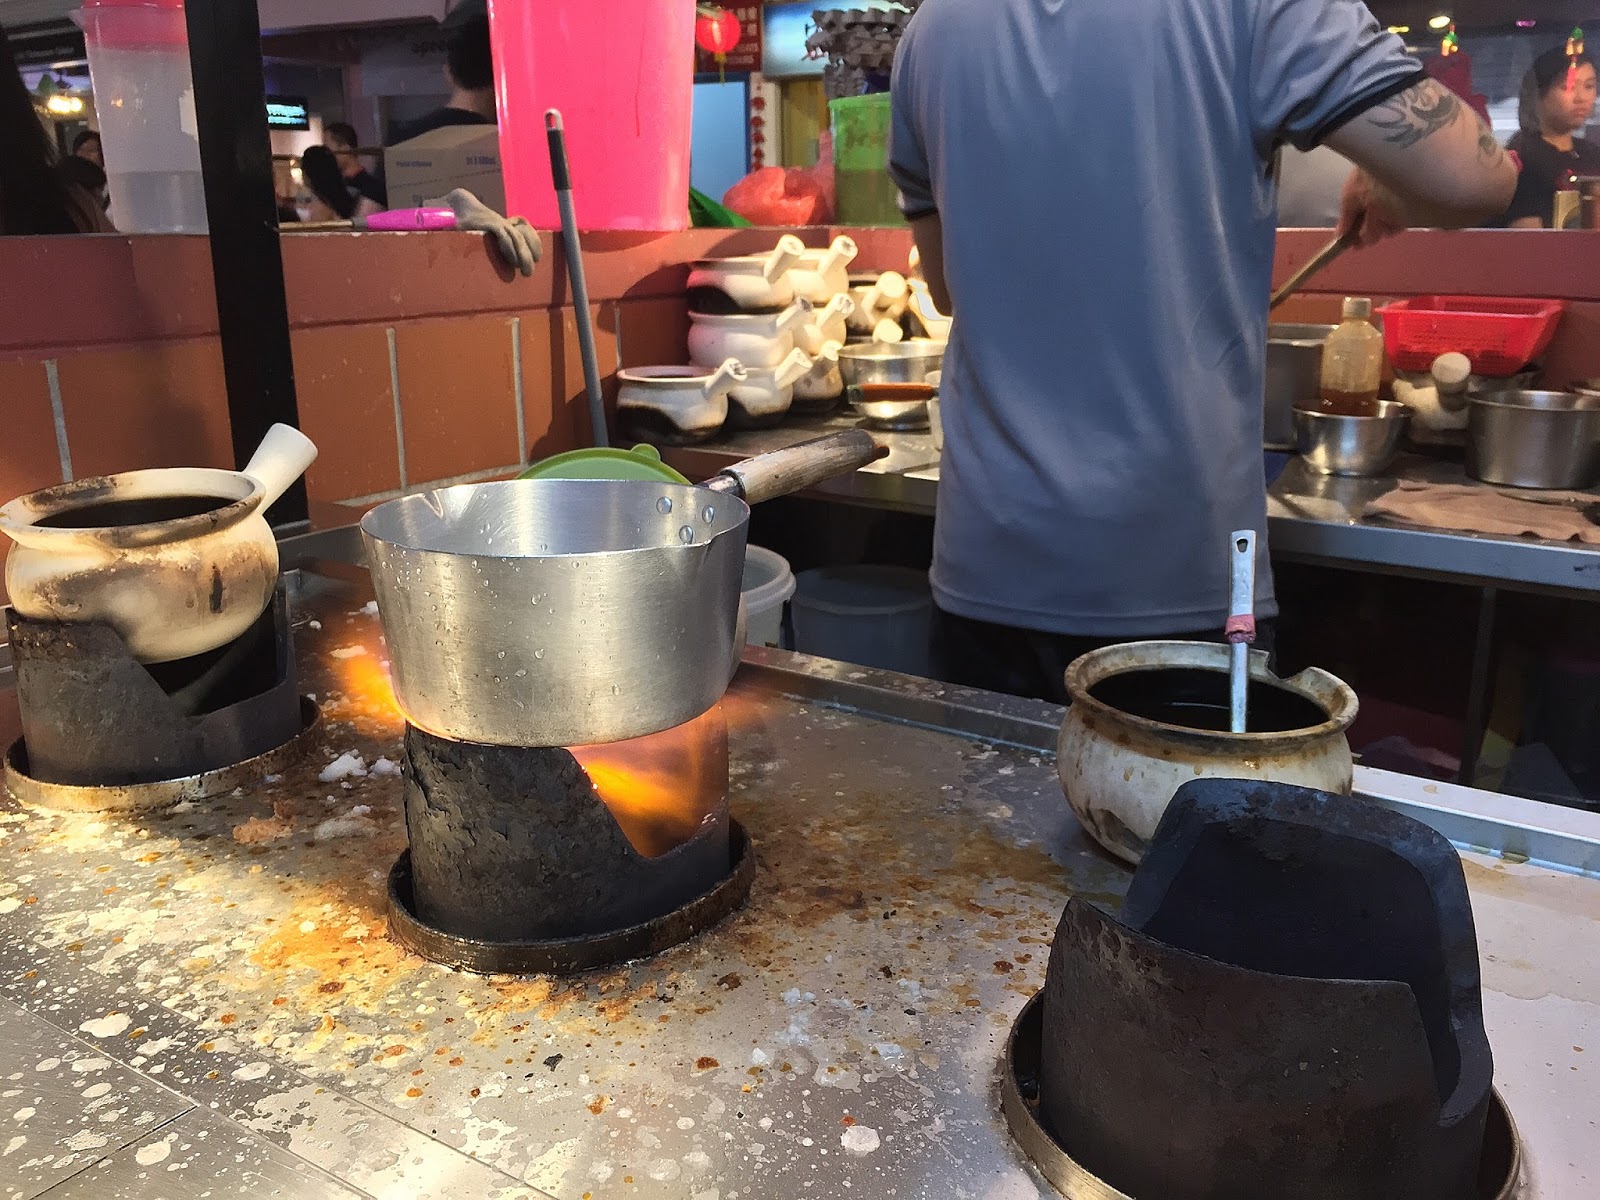 Chinatown Food Street - Preparation of Food